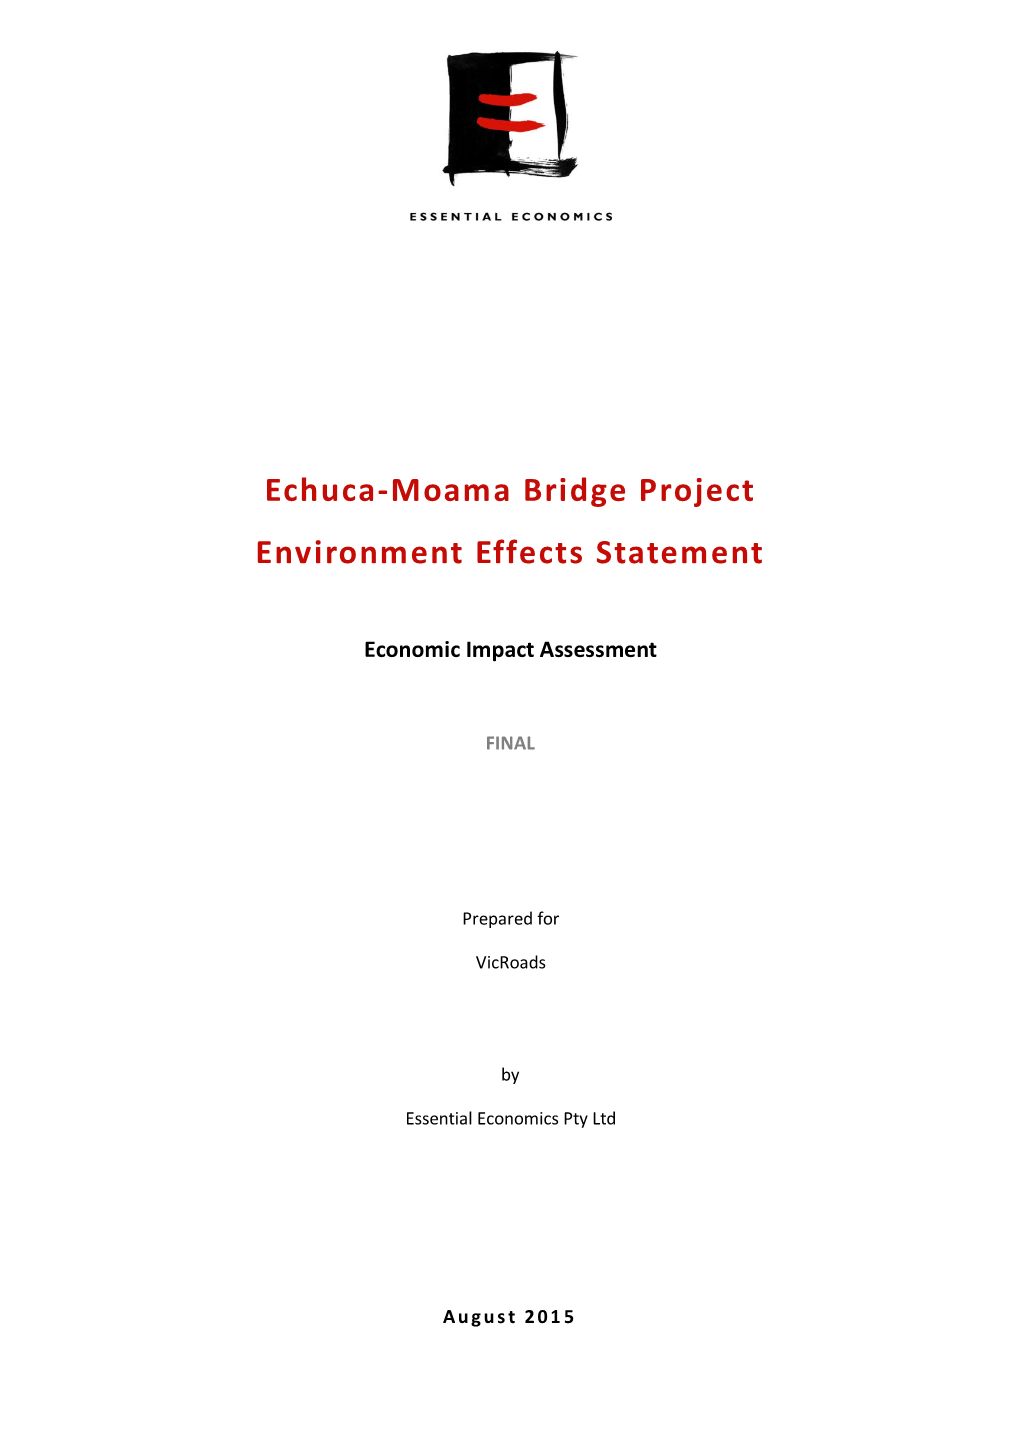 Echuca-Moama Bridge Project Environment Effects Statement